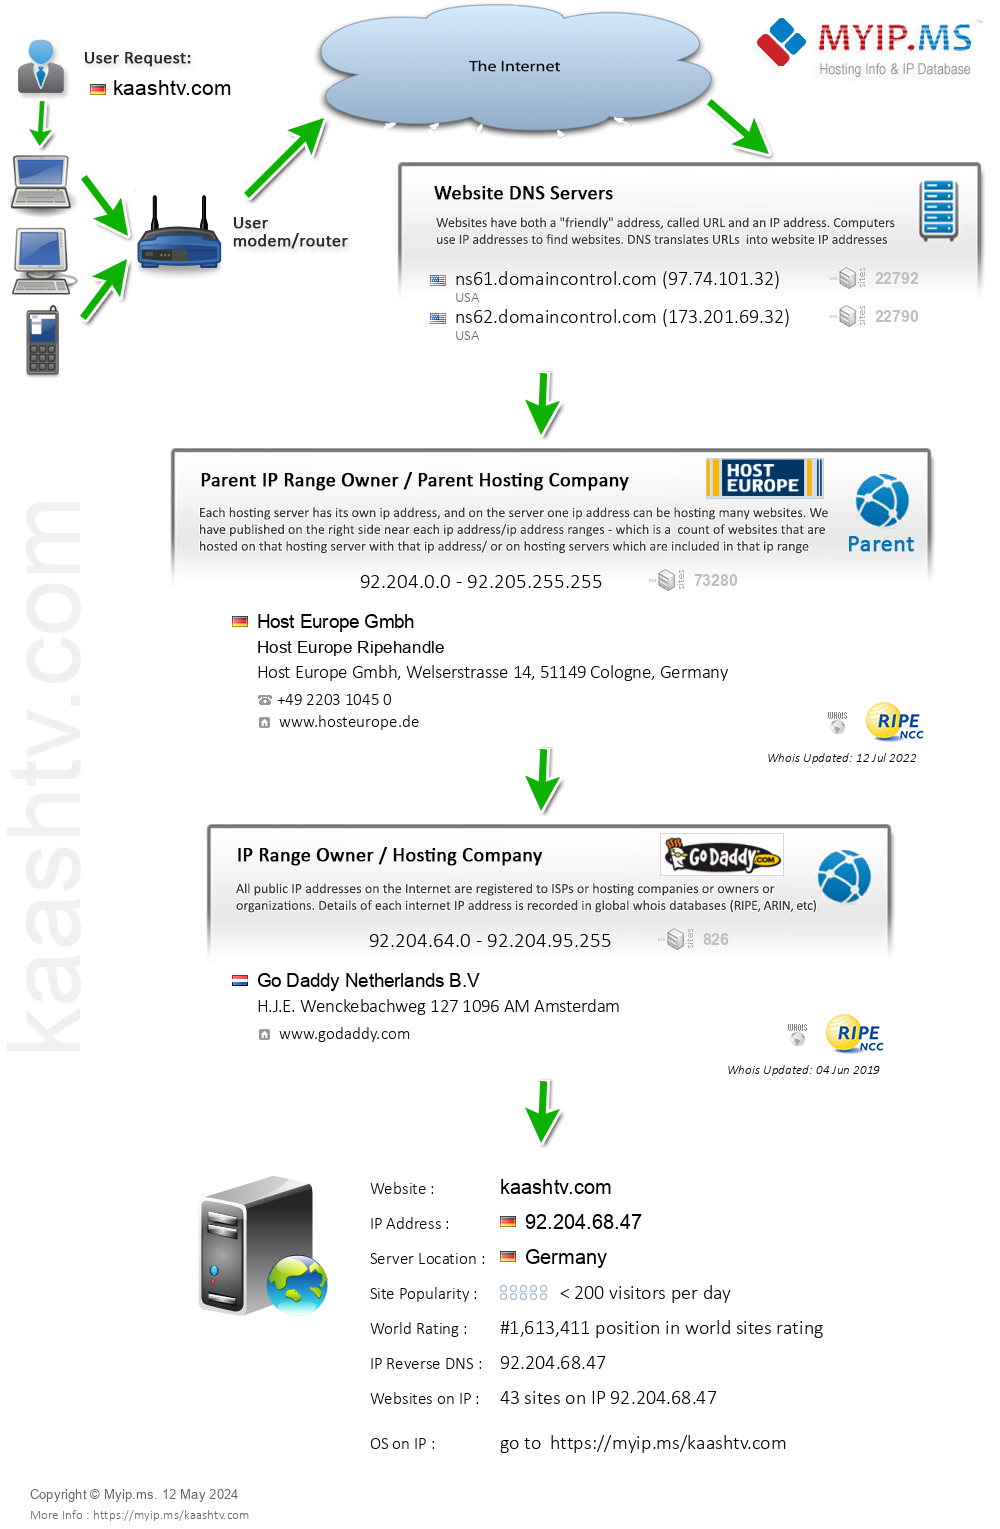 Kaashtv.com - Website Hosting Visual IP Diagram